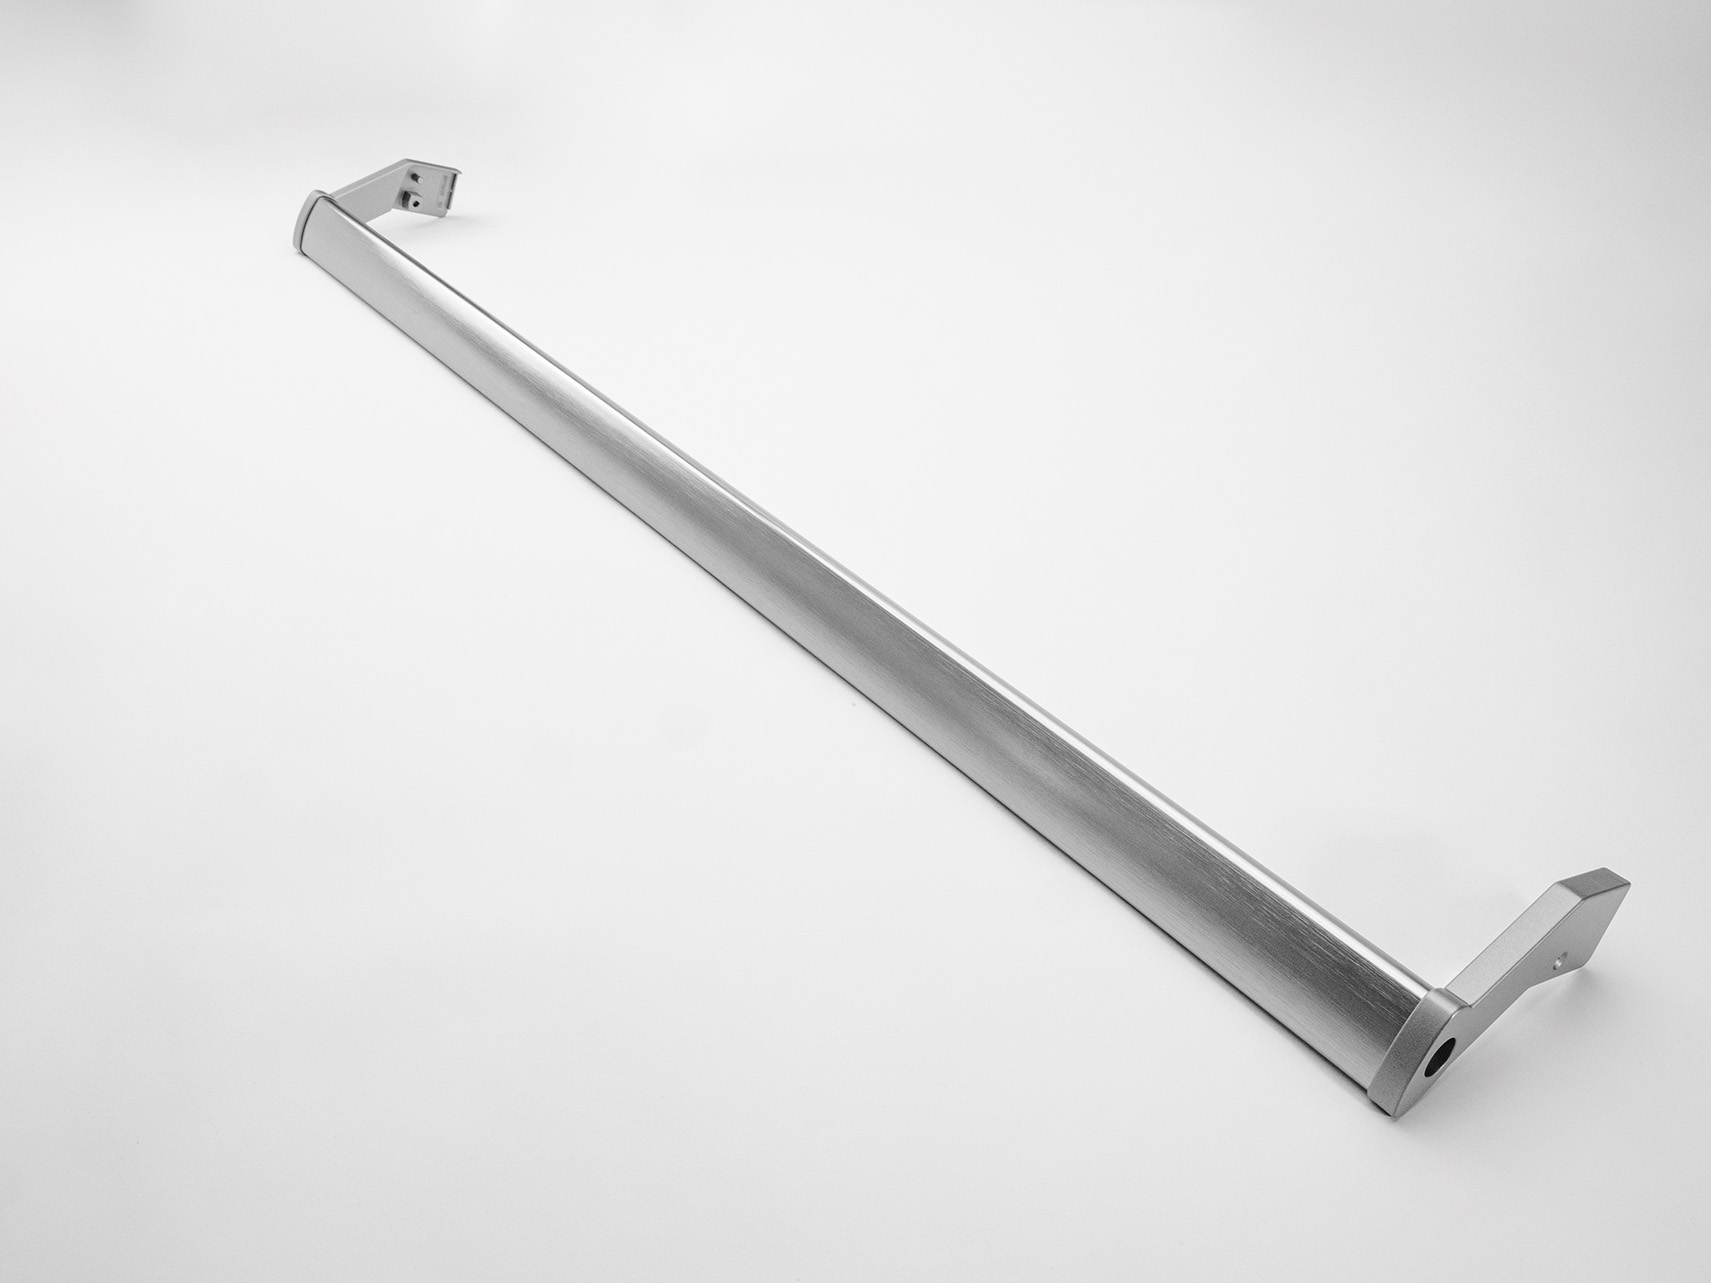 Aluminium tubular refrigerator handle - Brushed Anodized Stainless Steel with die-cast aluminium brackets painted metallic grey